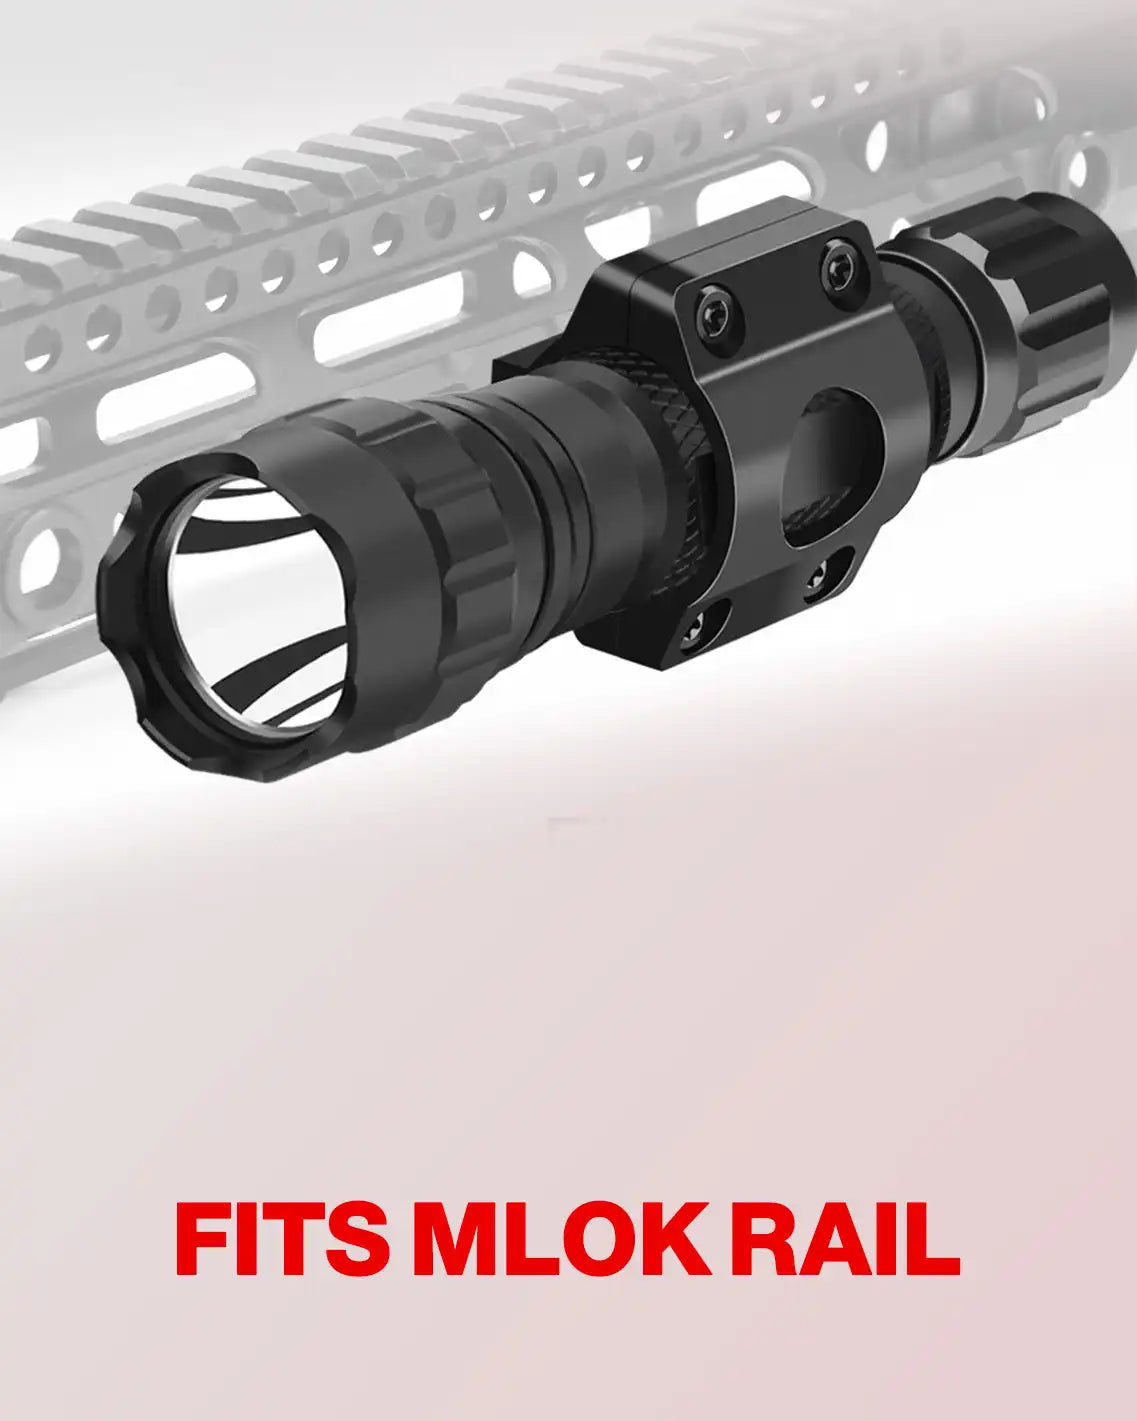 Feyachi FL22 Tactical Flashlight with Mount - 1200 Lumen Mlok